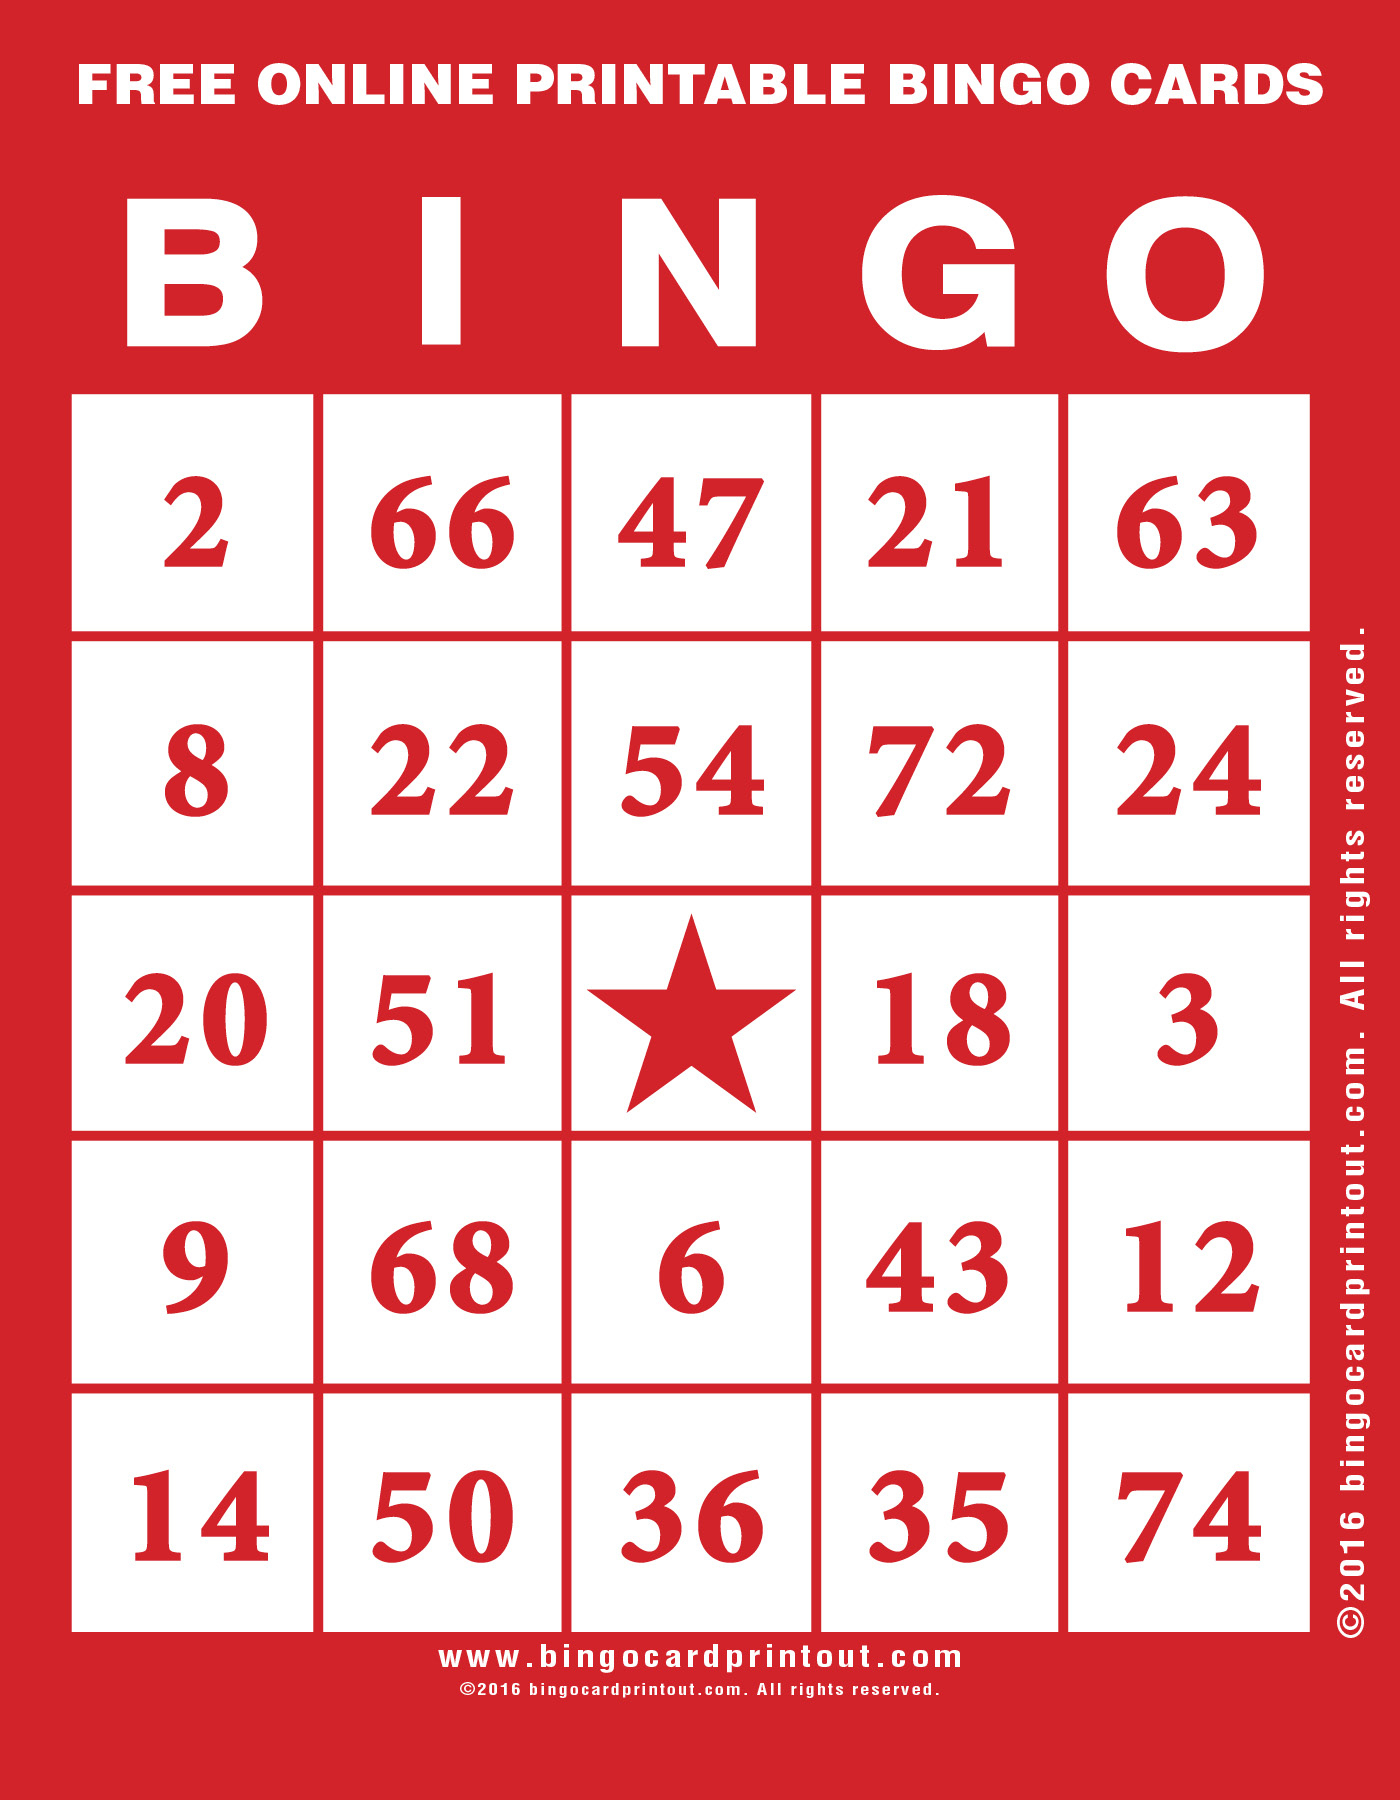 Free Online Printable Bingo Cards - Bingocardprintout